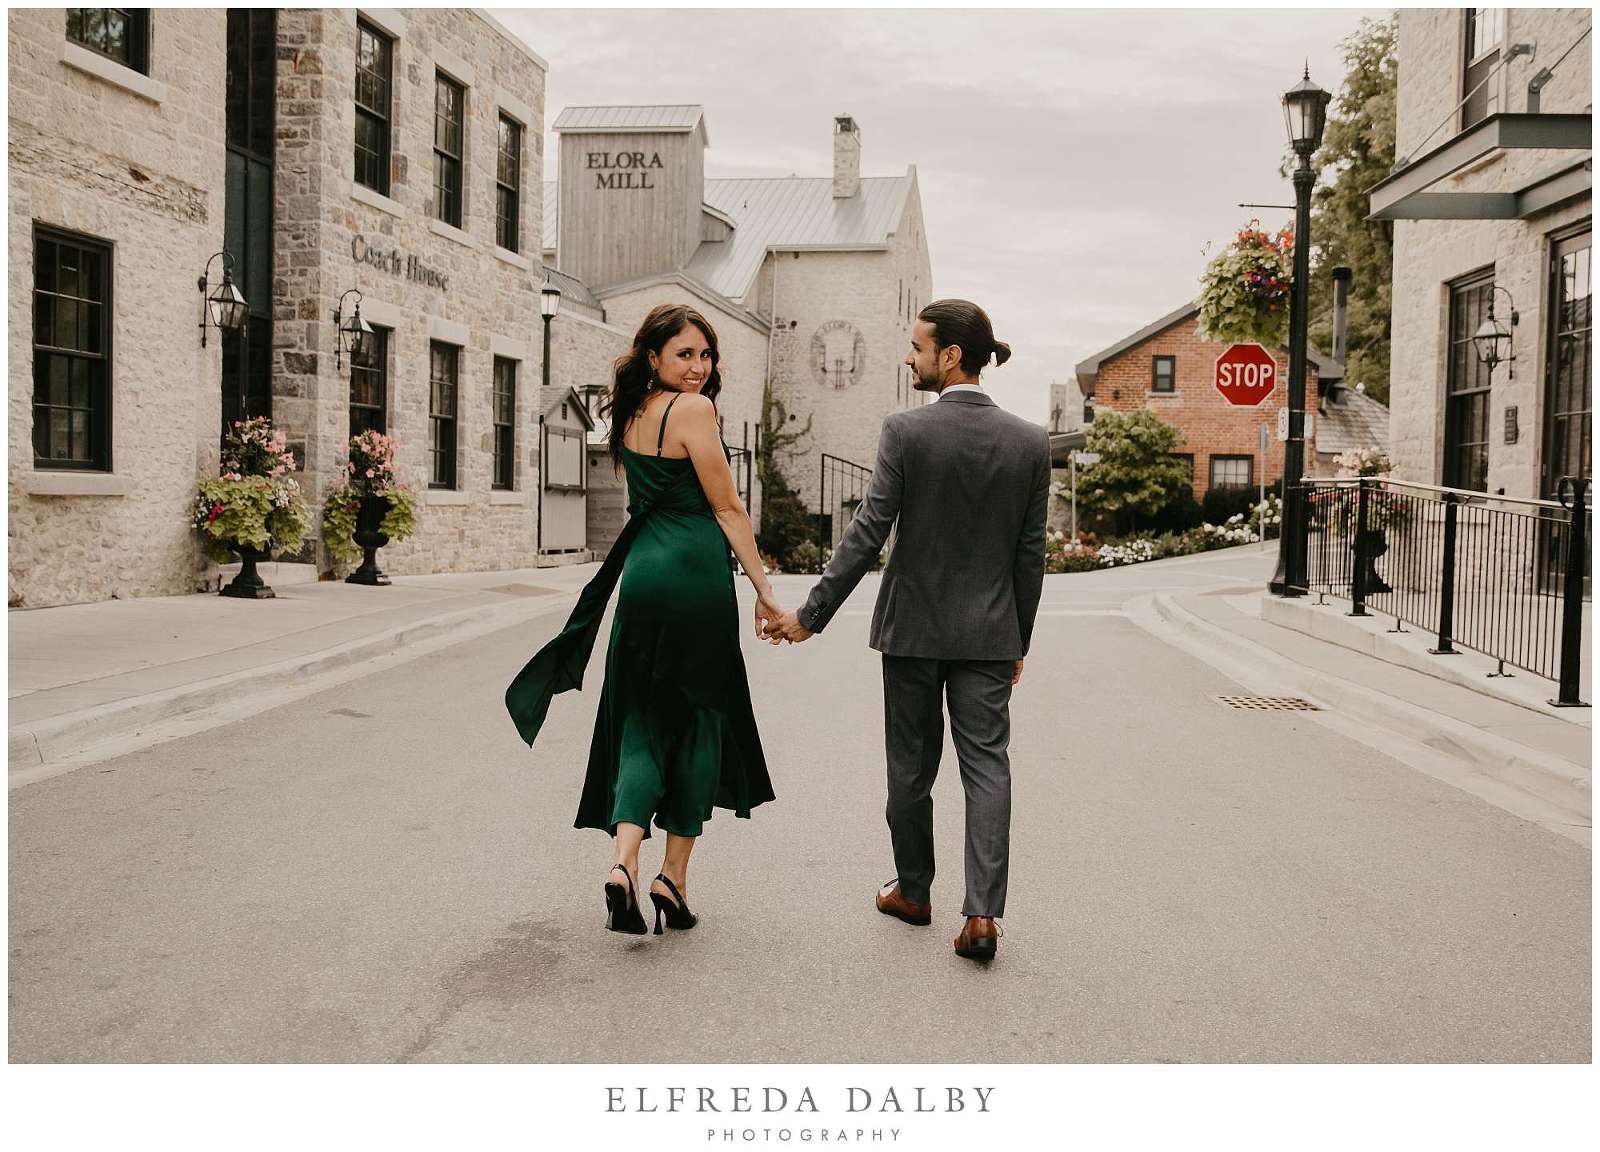 Beautiful couple walking down the street towards Elora Mill